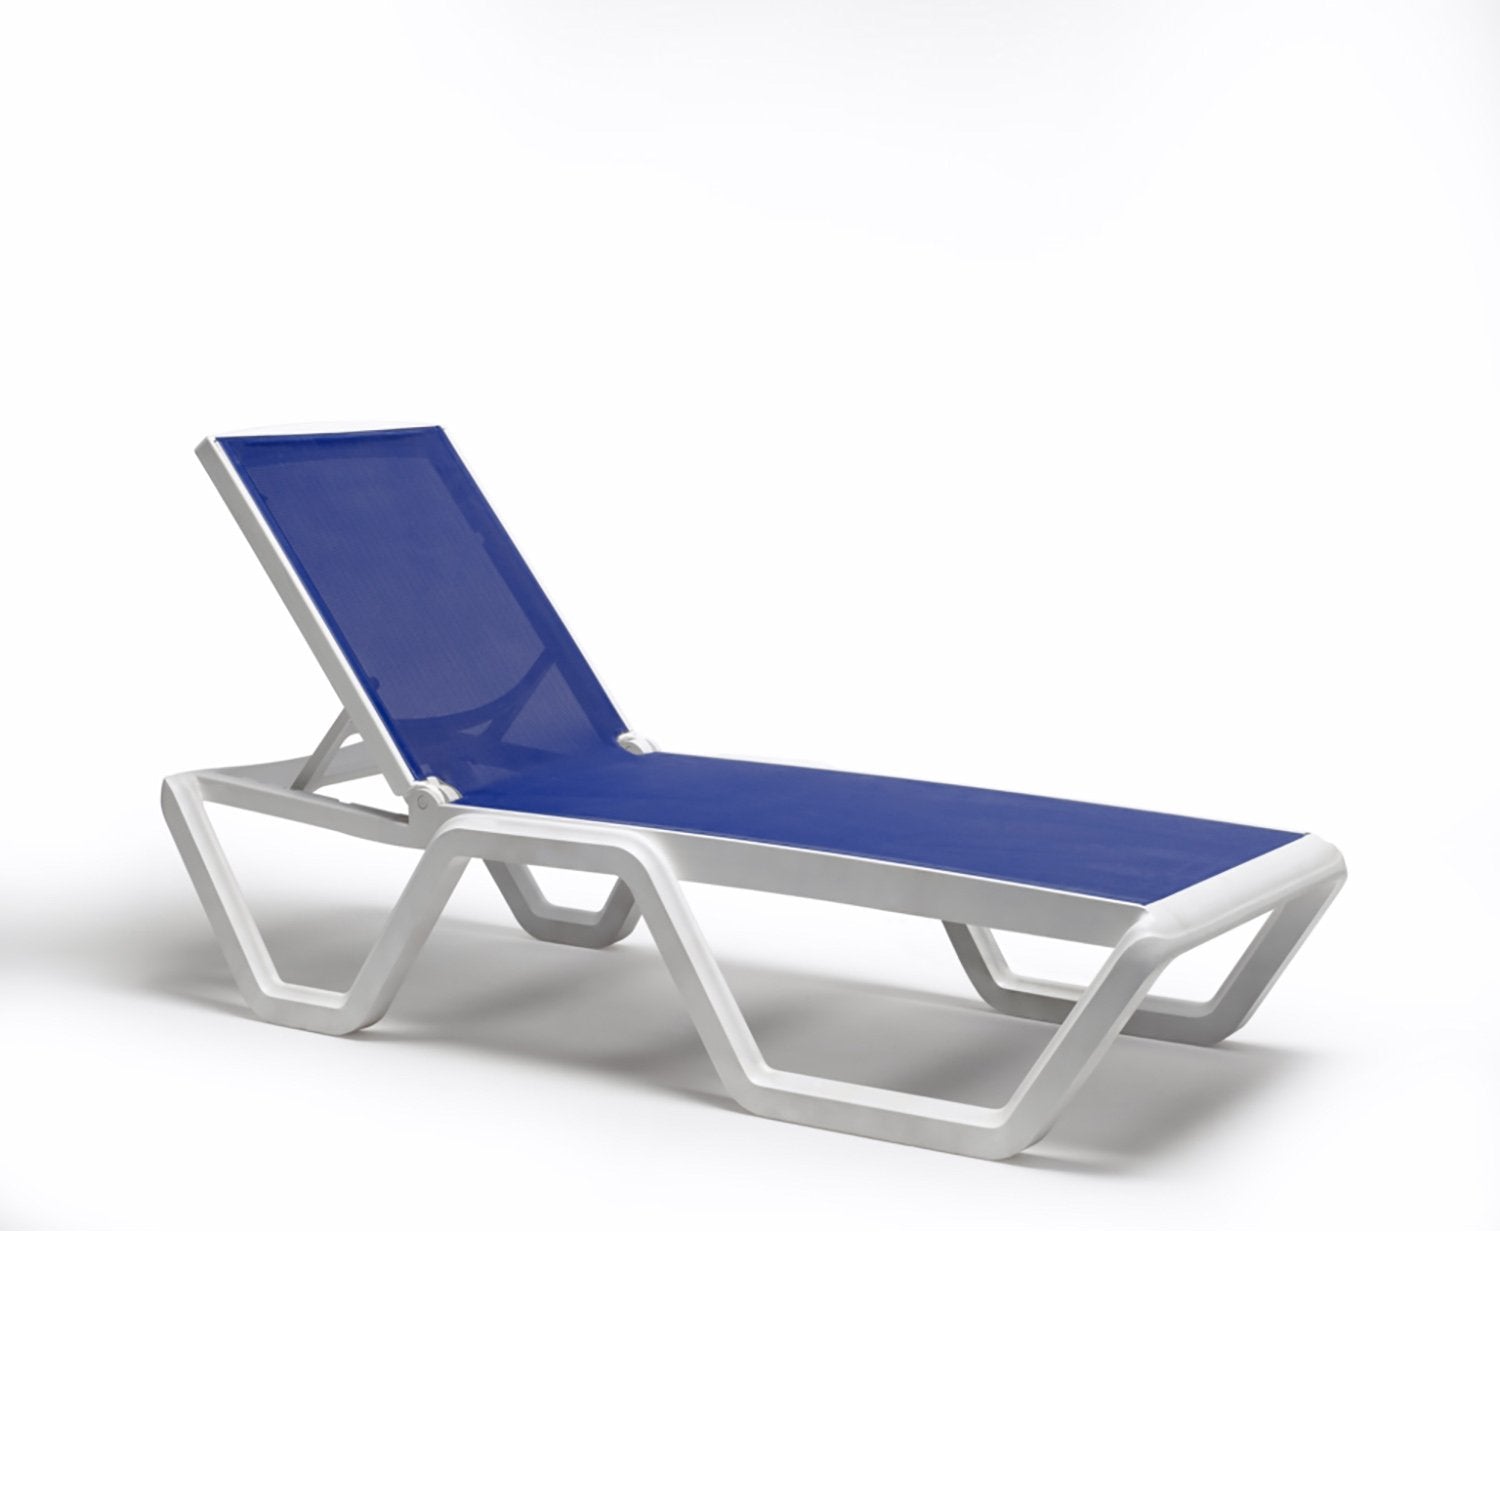 Vela 5 position folding sun bed by Scab Design